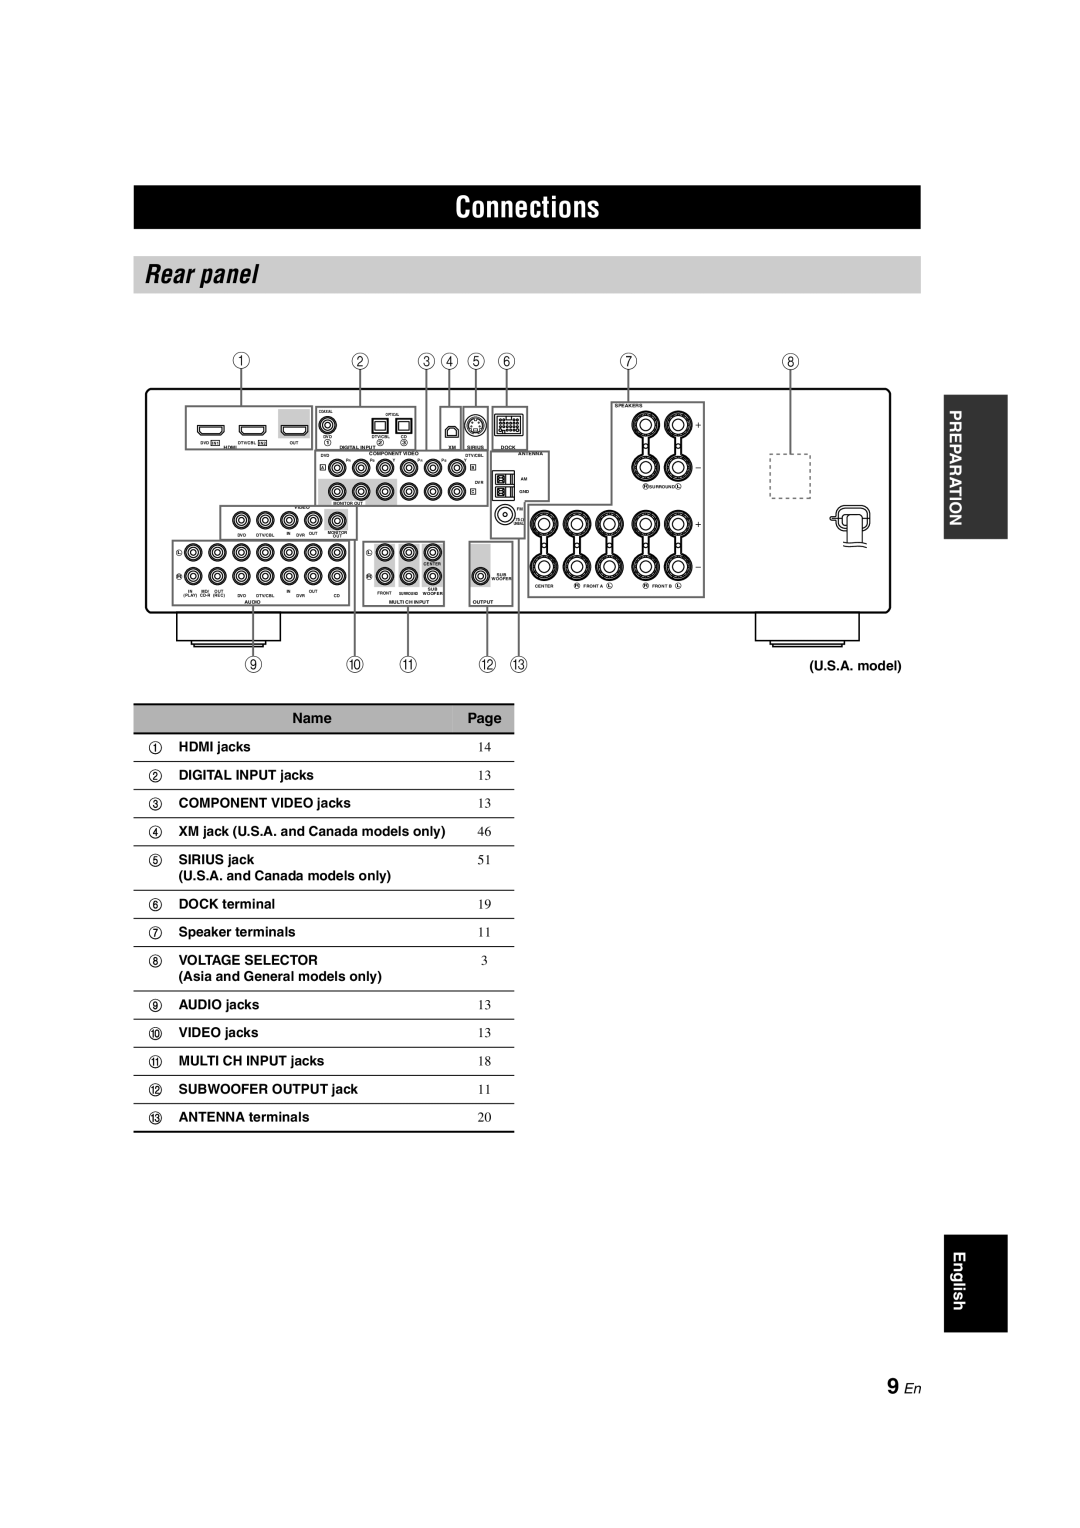 Yamaha RX-V463 owner manual Connections, Rear panel, 9 En, 3 4 5 